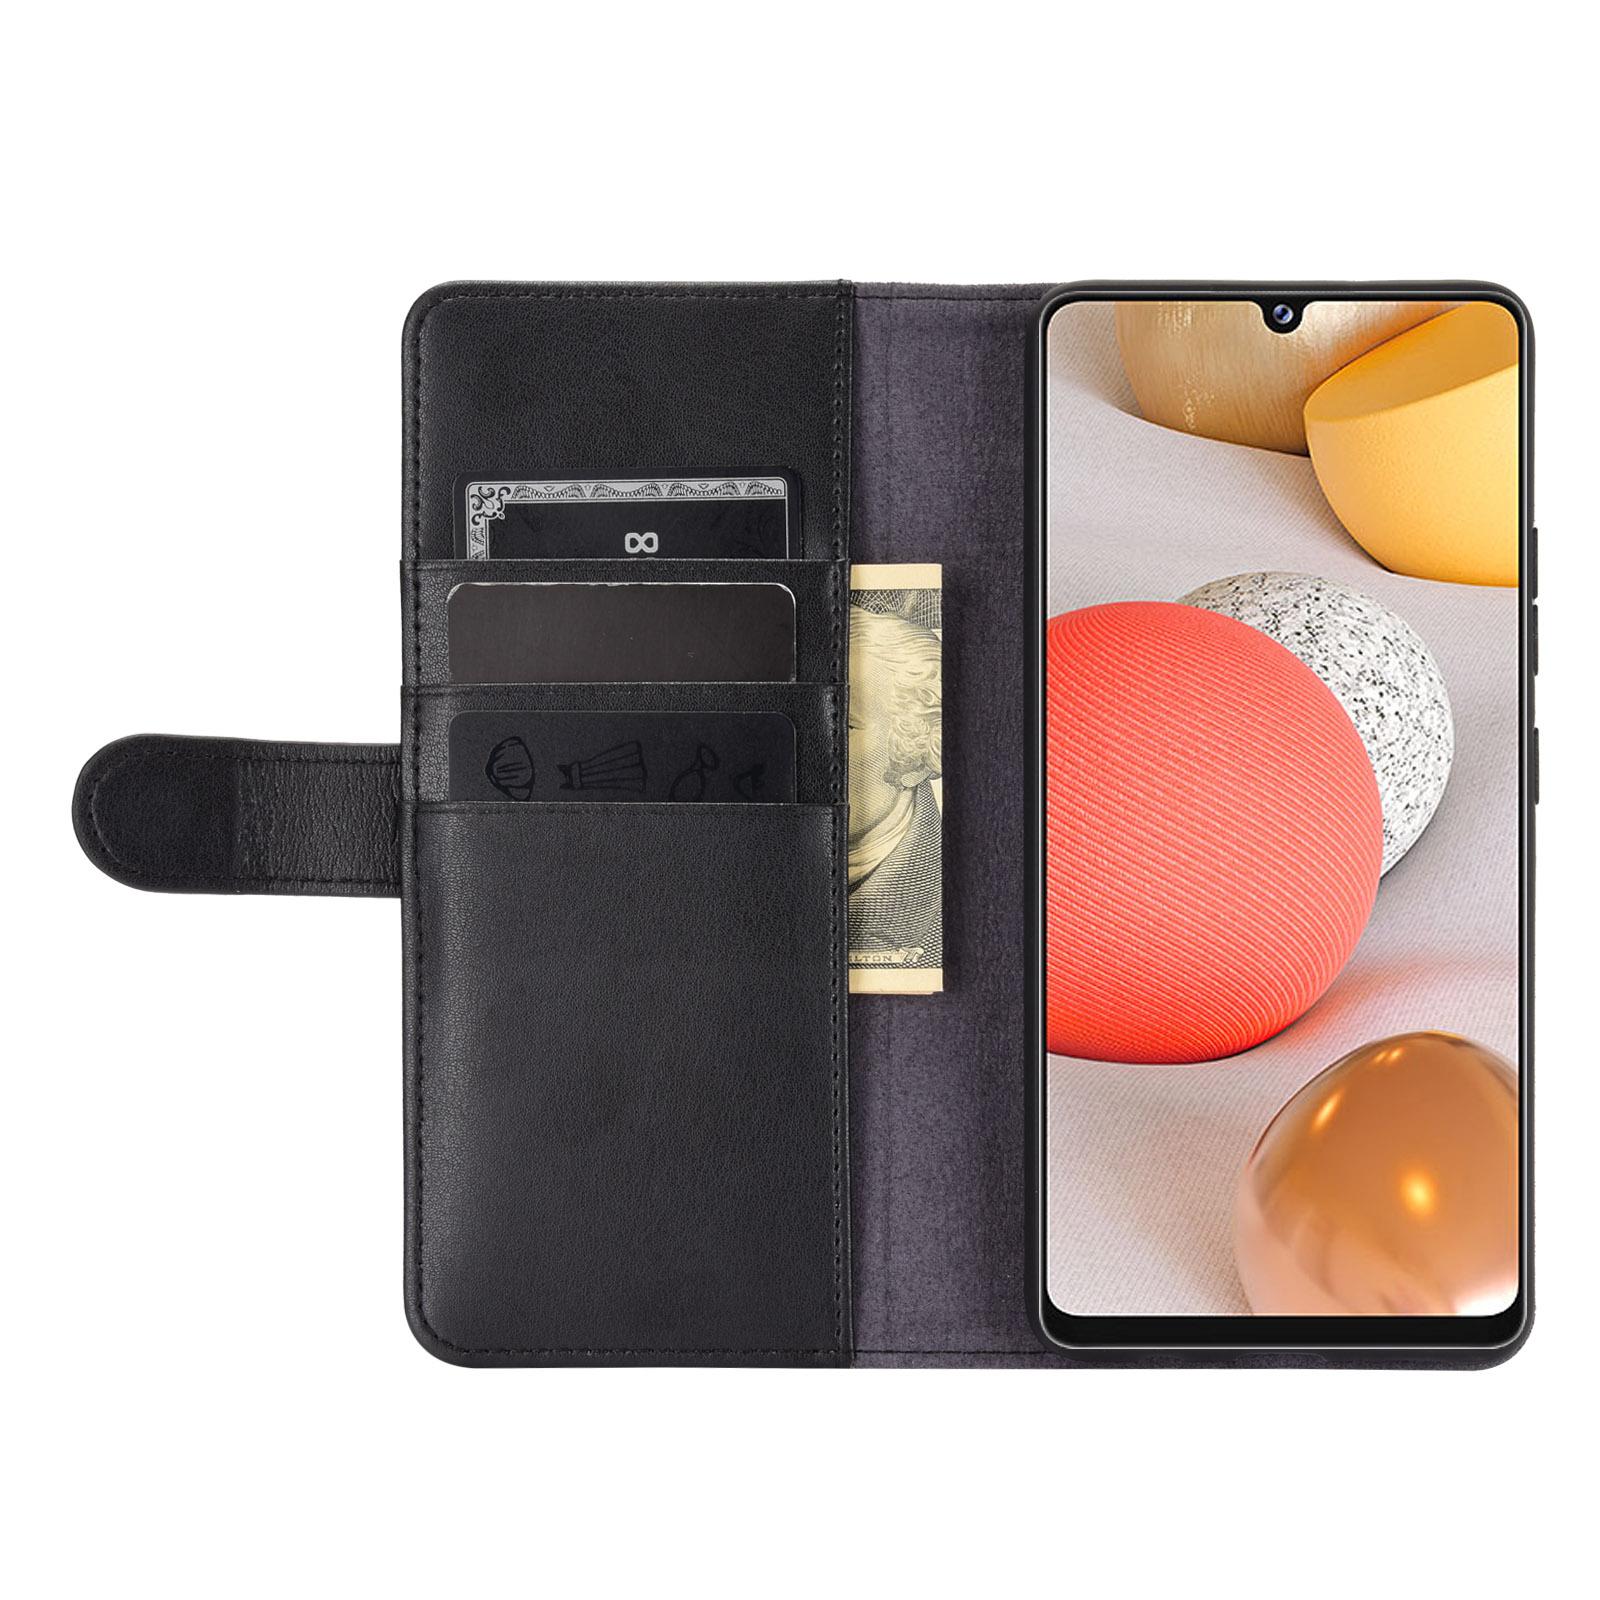 Samsung Galaxy A42 Genuine Leather Wallet Case Black